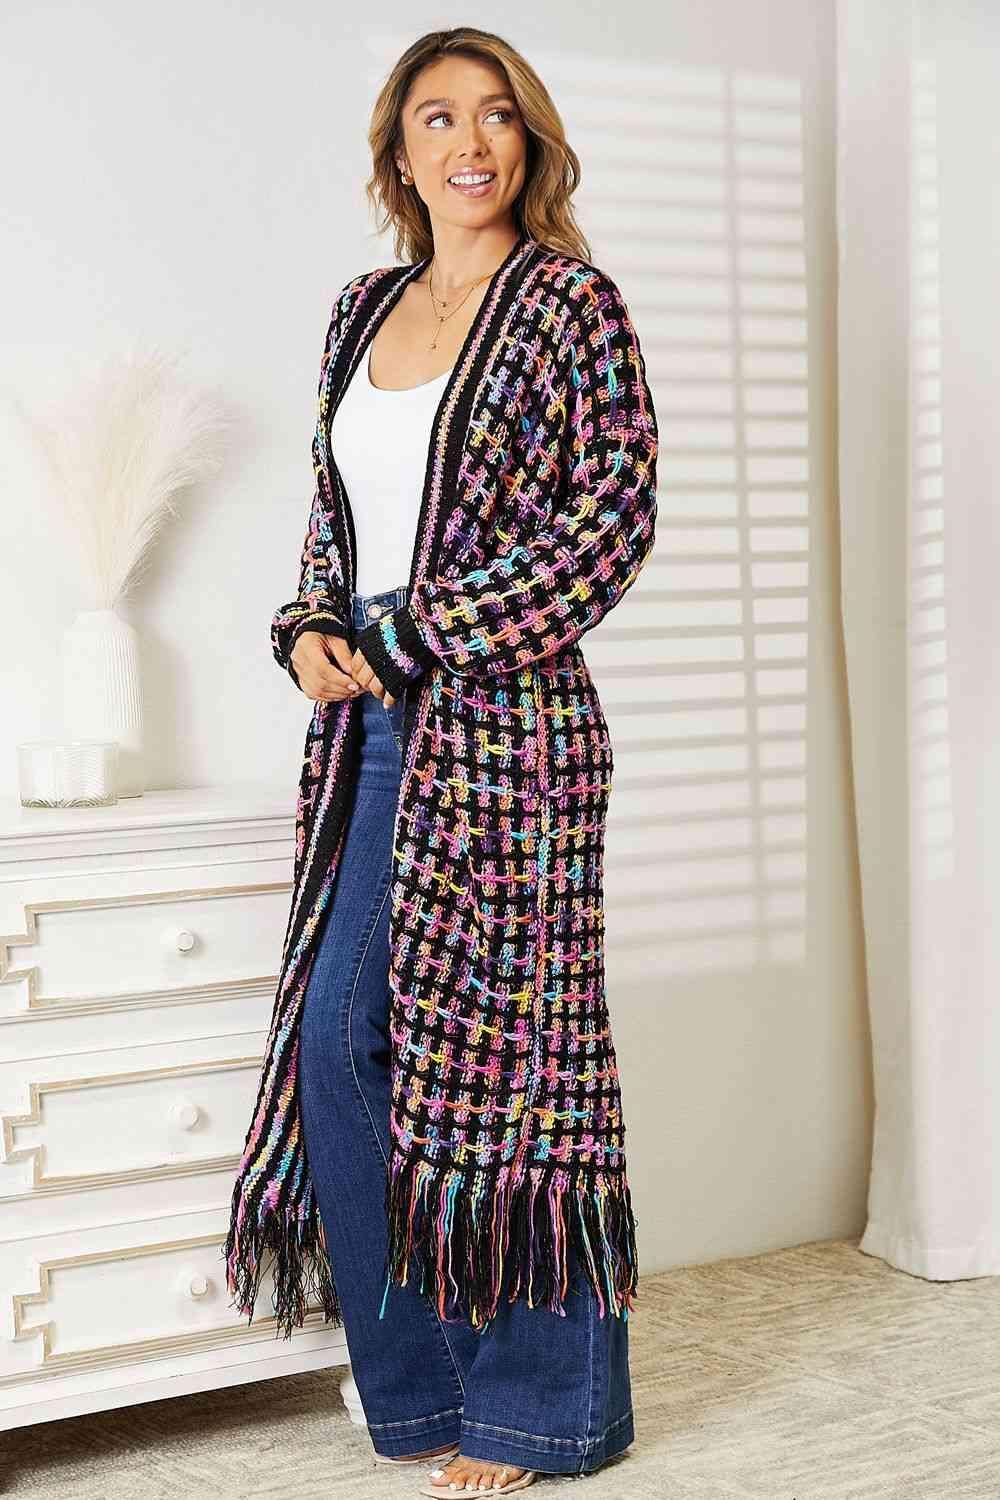 Bona Fide Fashion - Full Size Multicolored Open Front Fringe Hem Cardigan - Women Fashion - Bona Fide Fashion